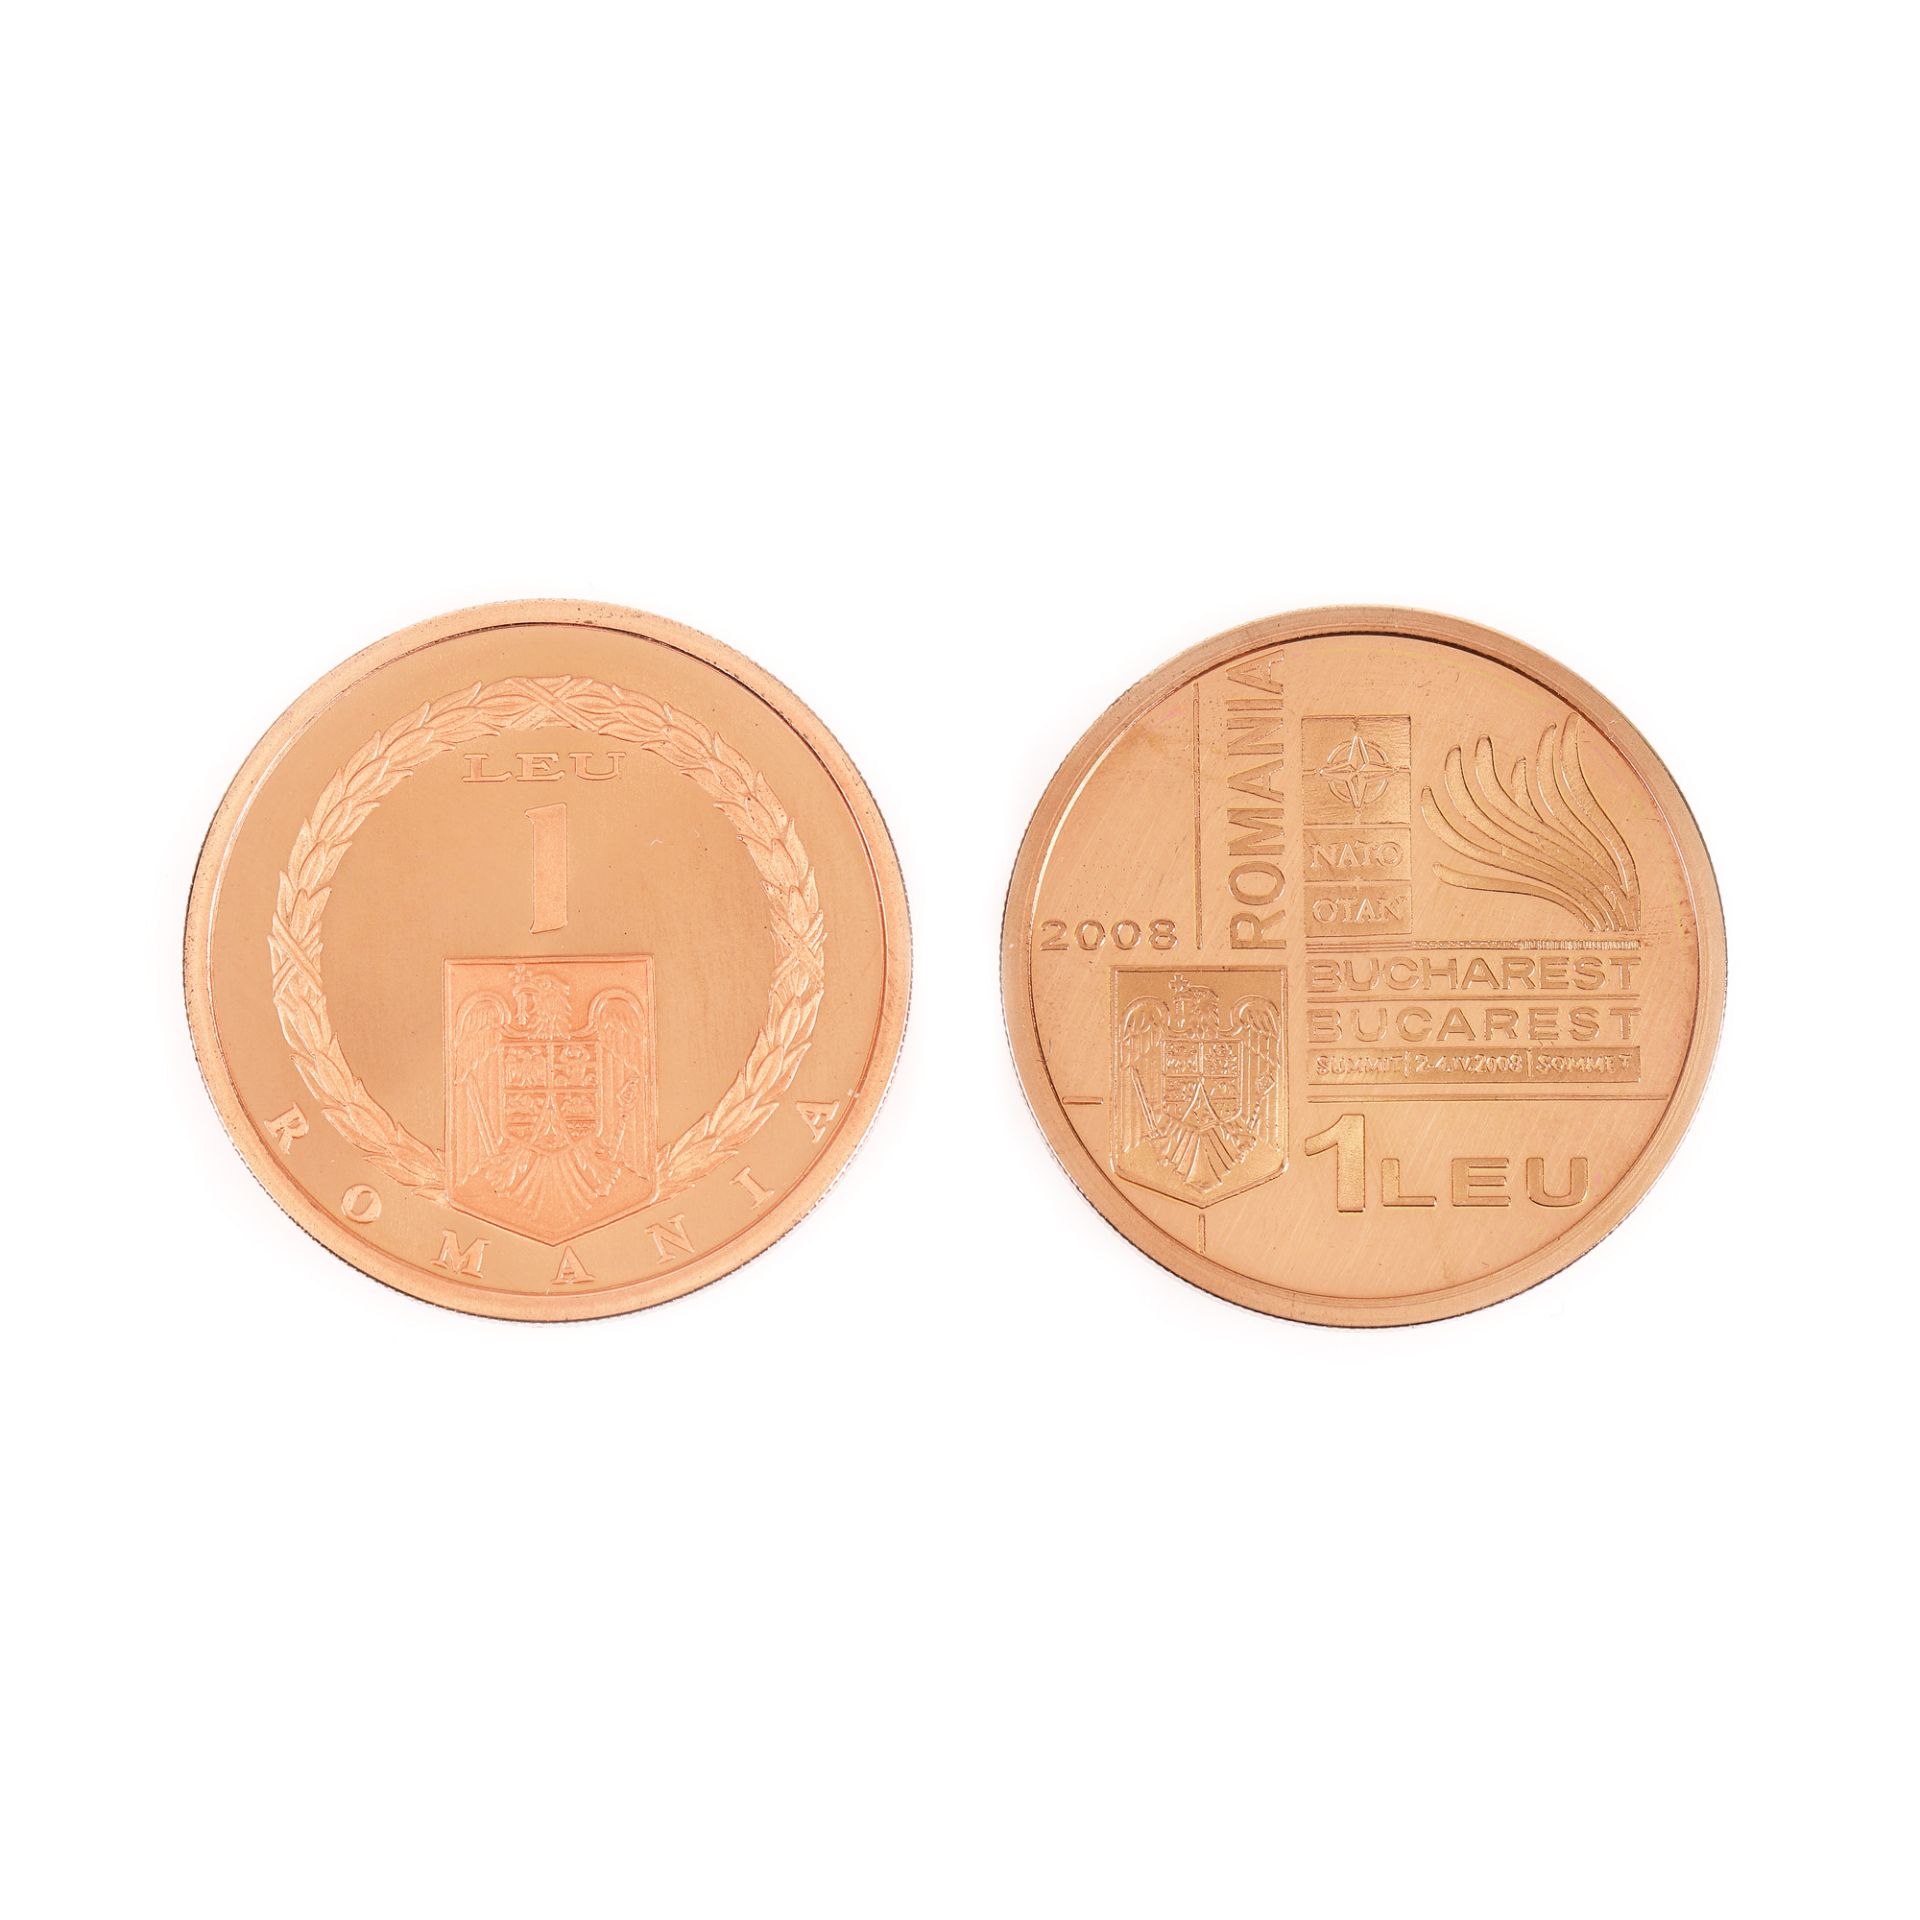 Two BNR commemorative coins, made of tombac, Ovidius Naso 2008 and NATO Summit 2008, original boxes - Image 3 of 3